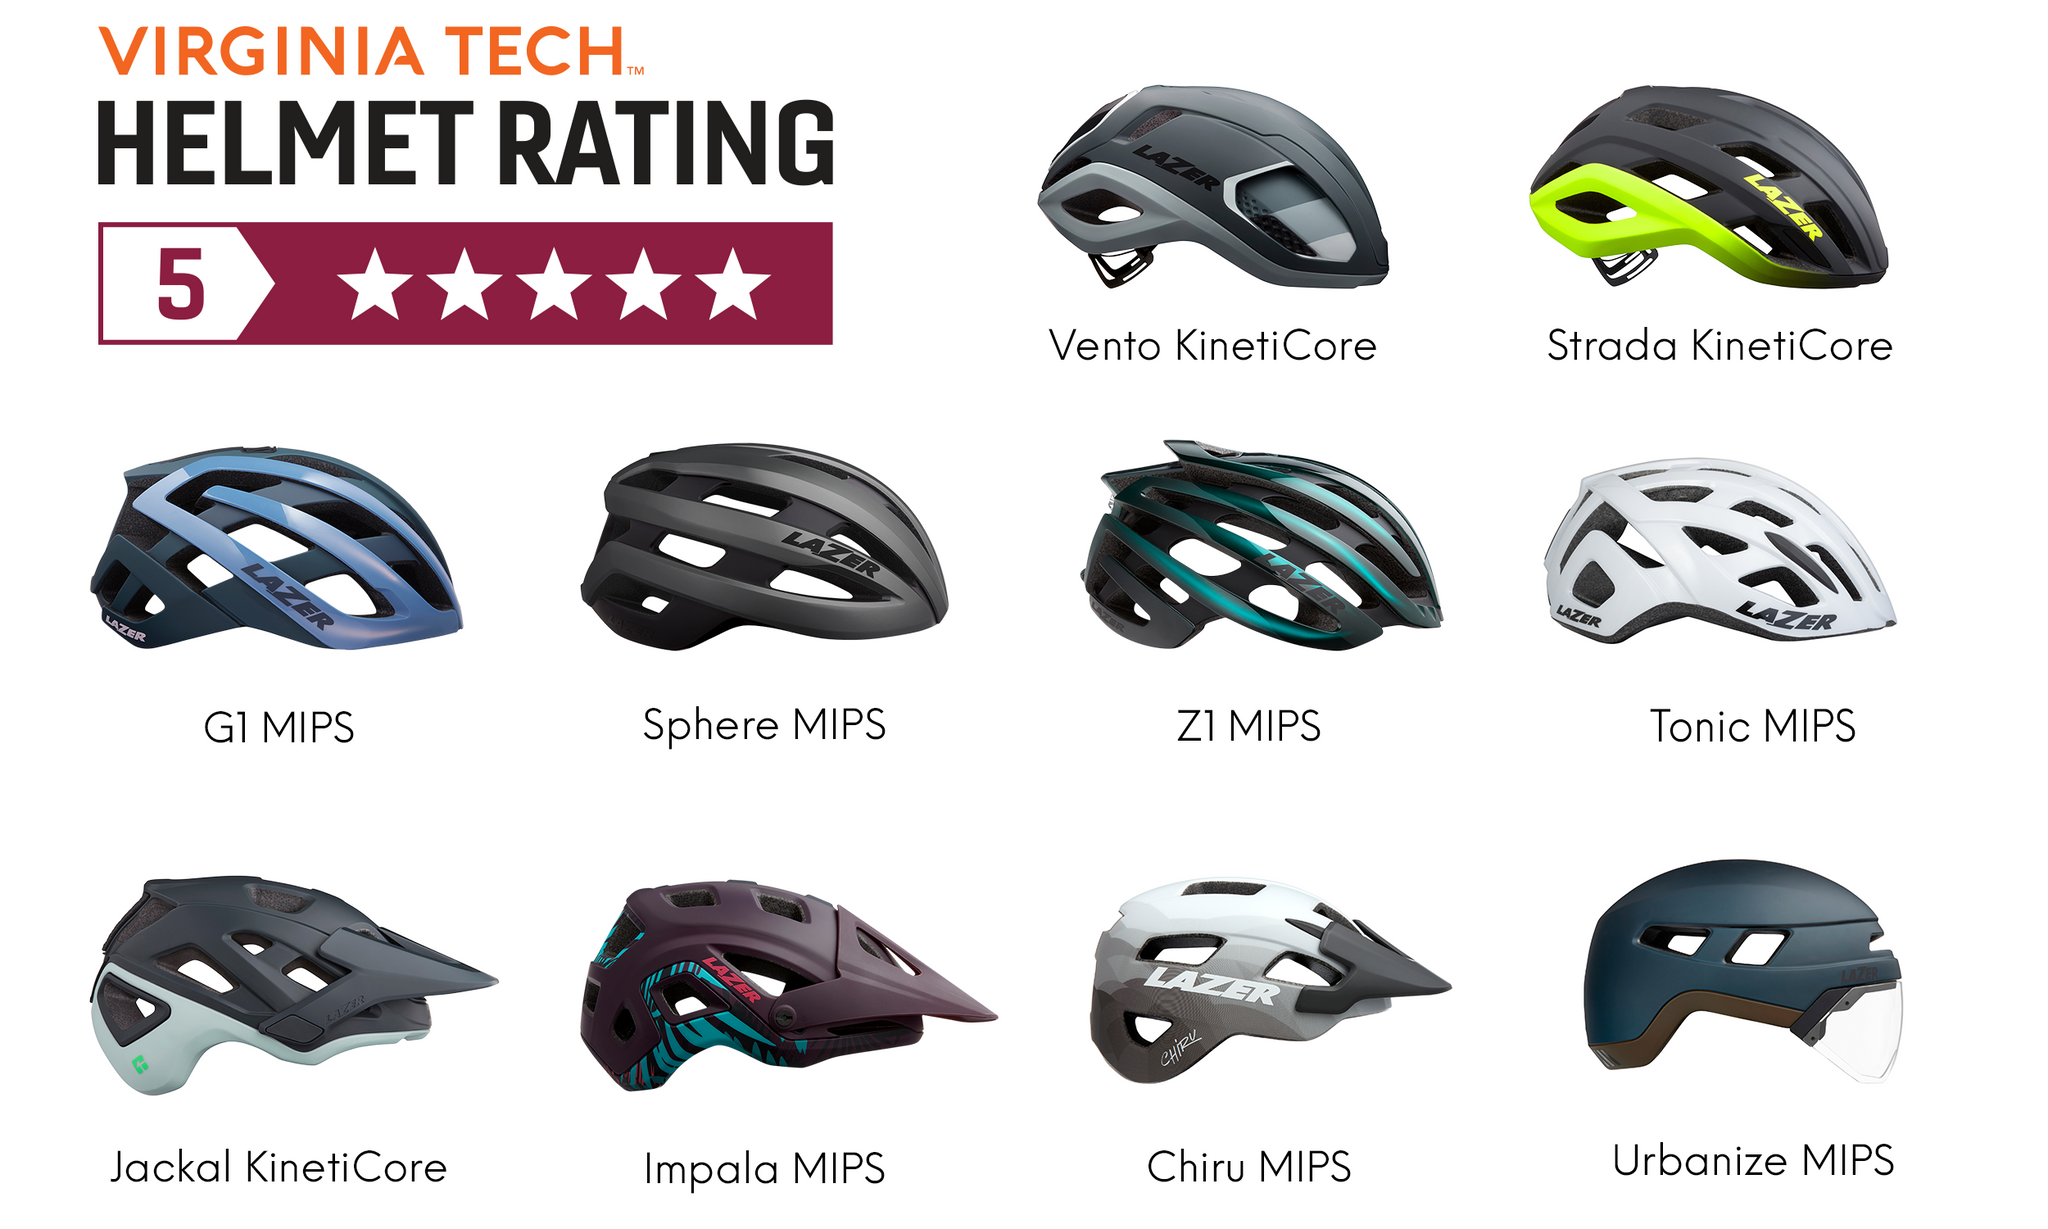 Lazer VT 5-star rated helmets